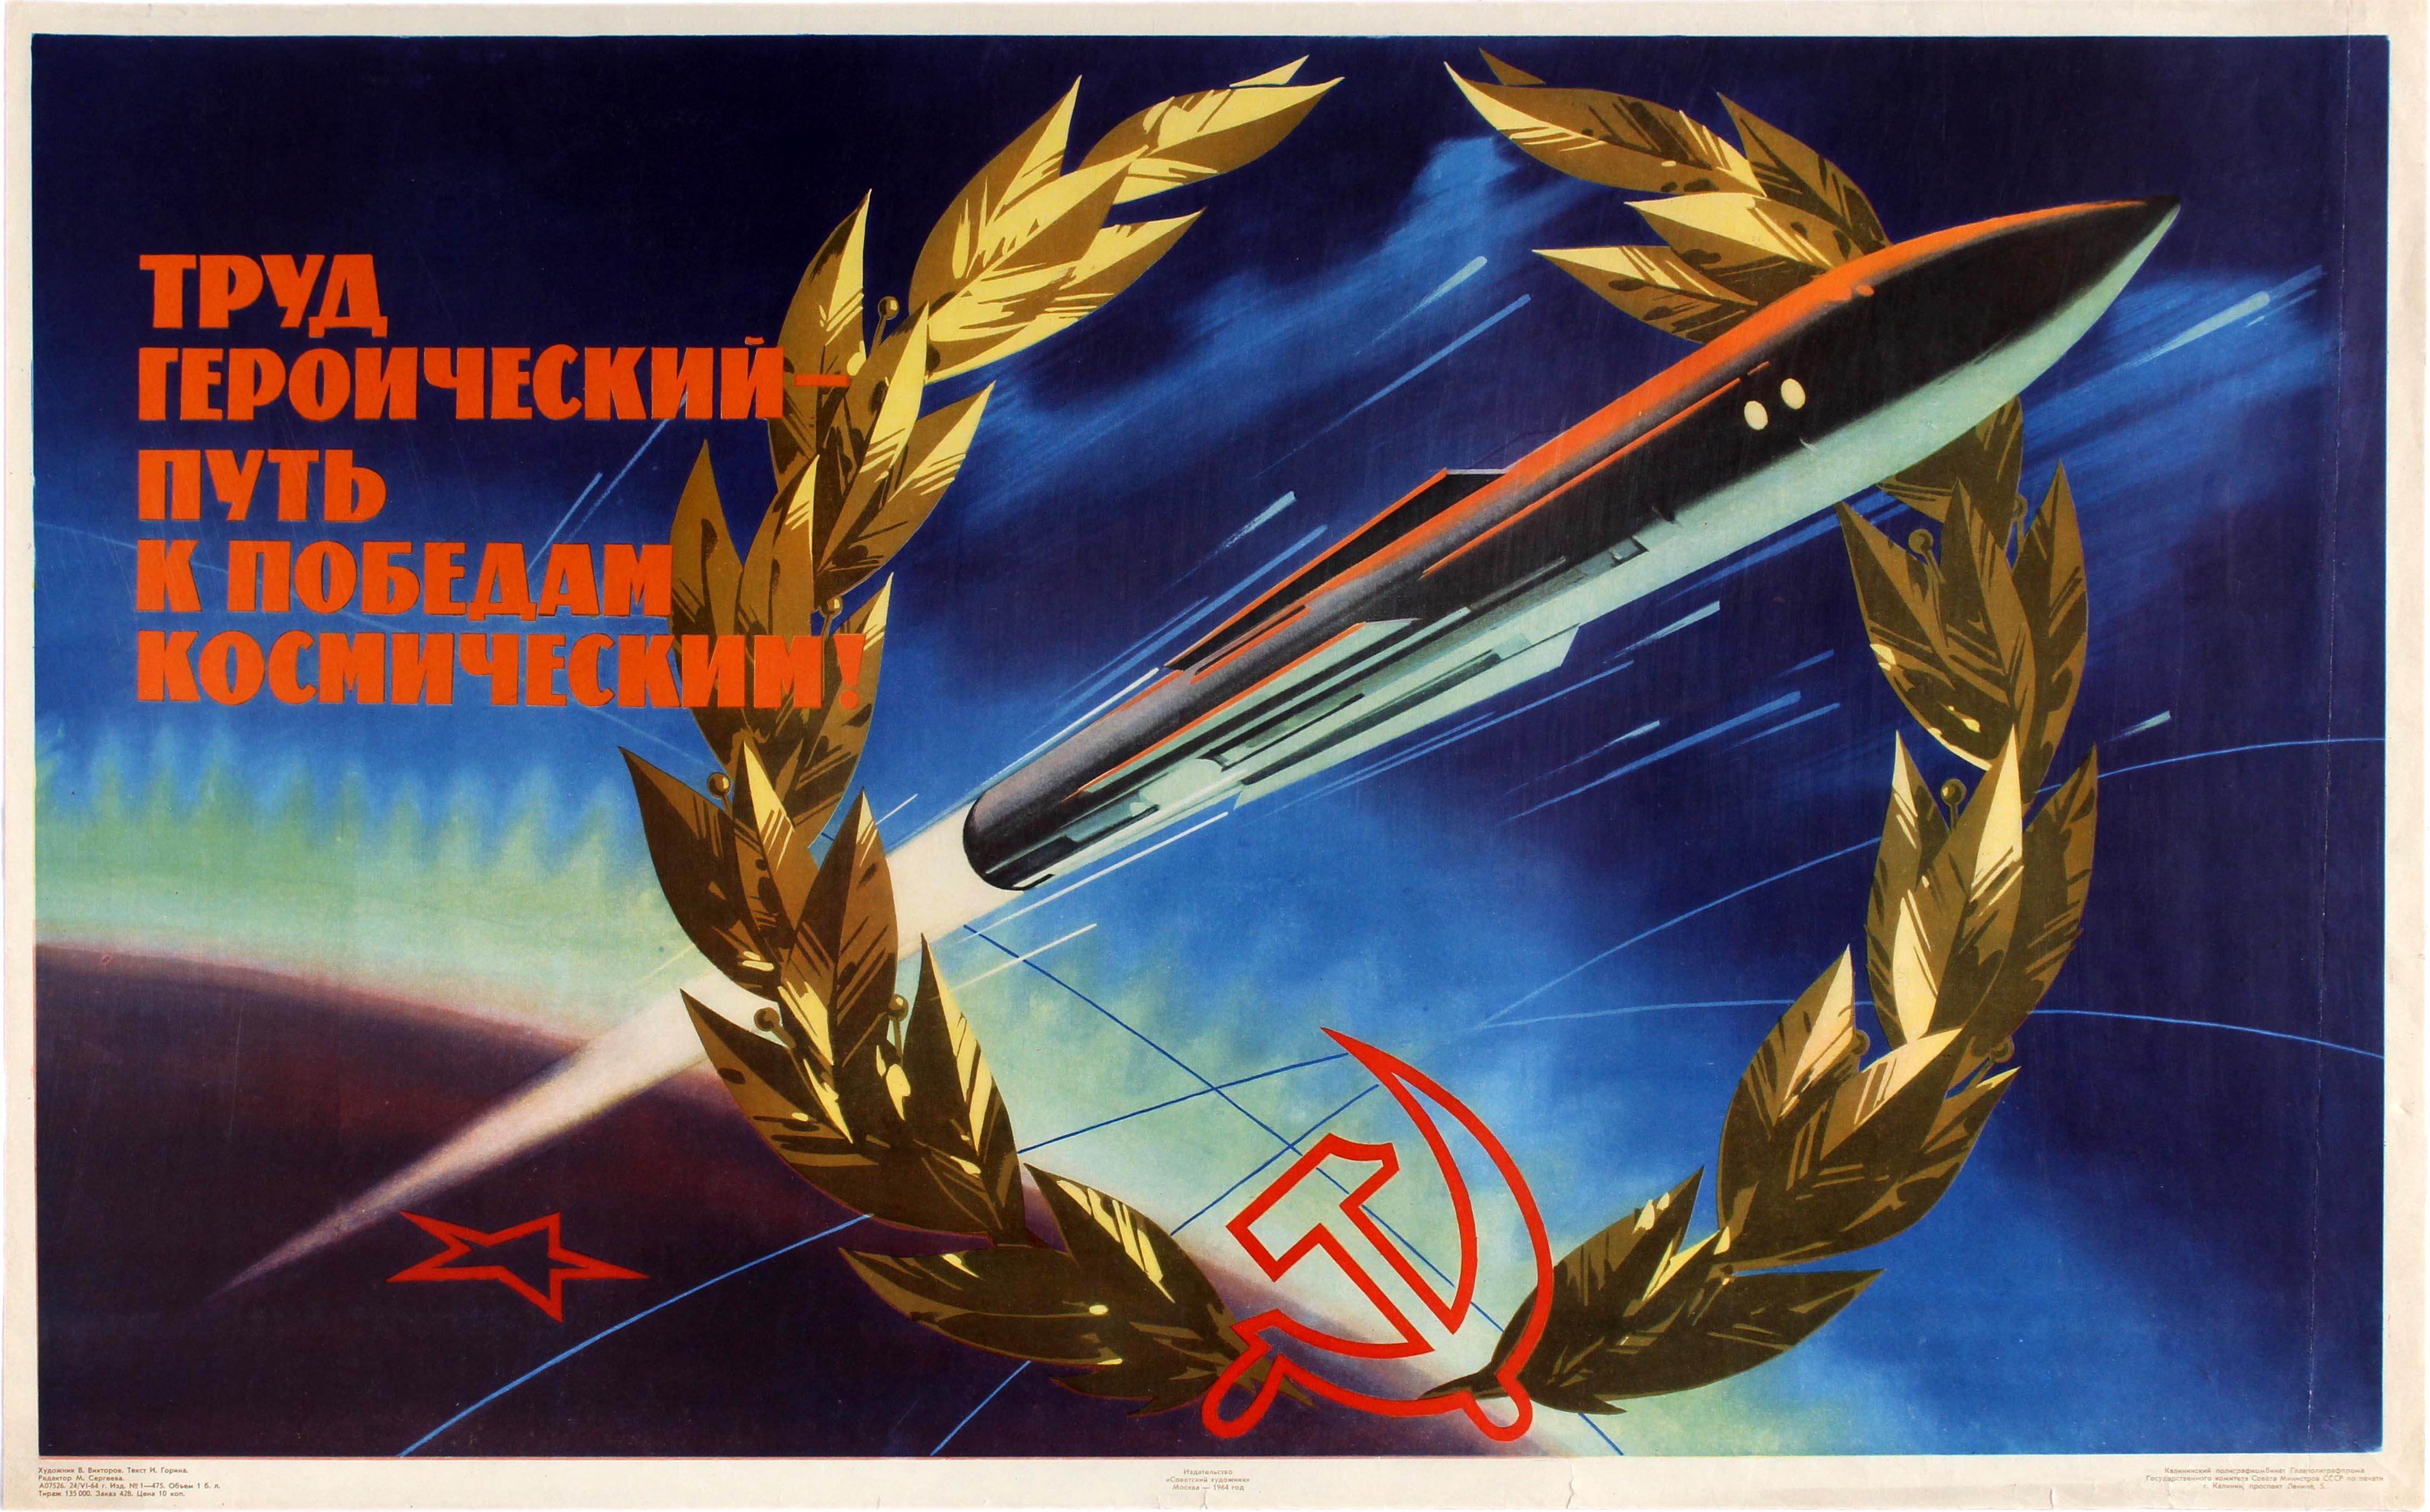 Valentin Viktorov Print - Original Vintage Soviet Space Race Propaganda Poster Heroic Cosmic Victory USSR